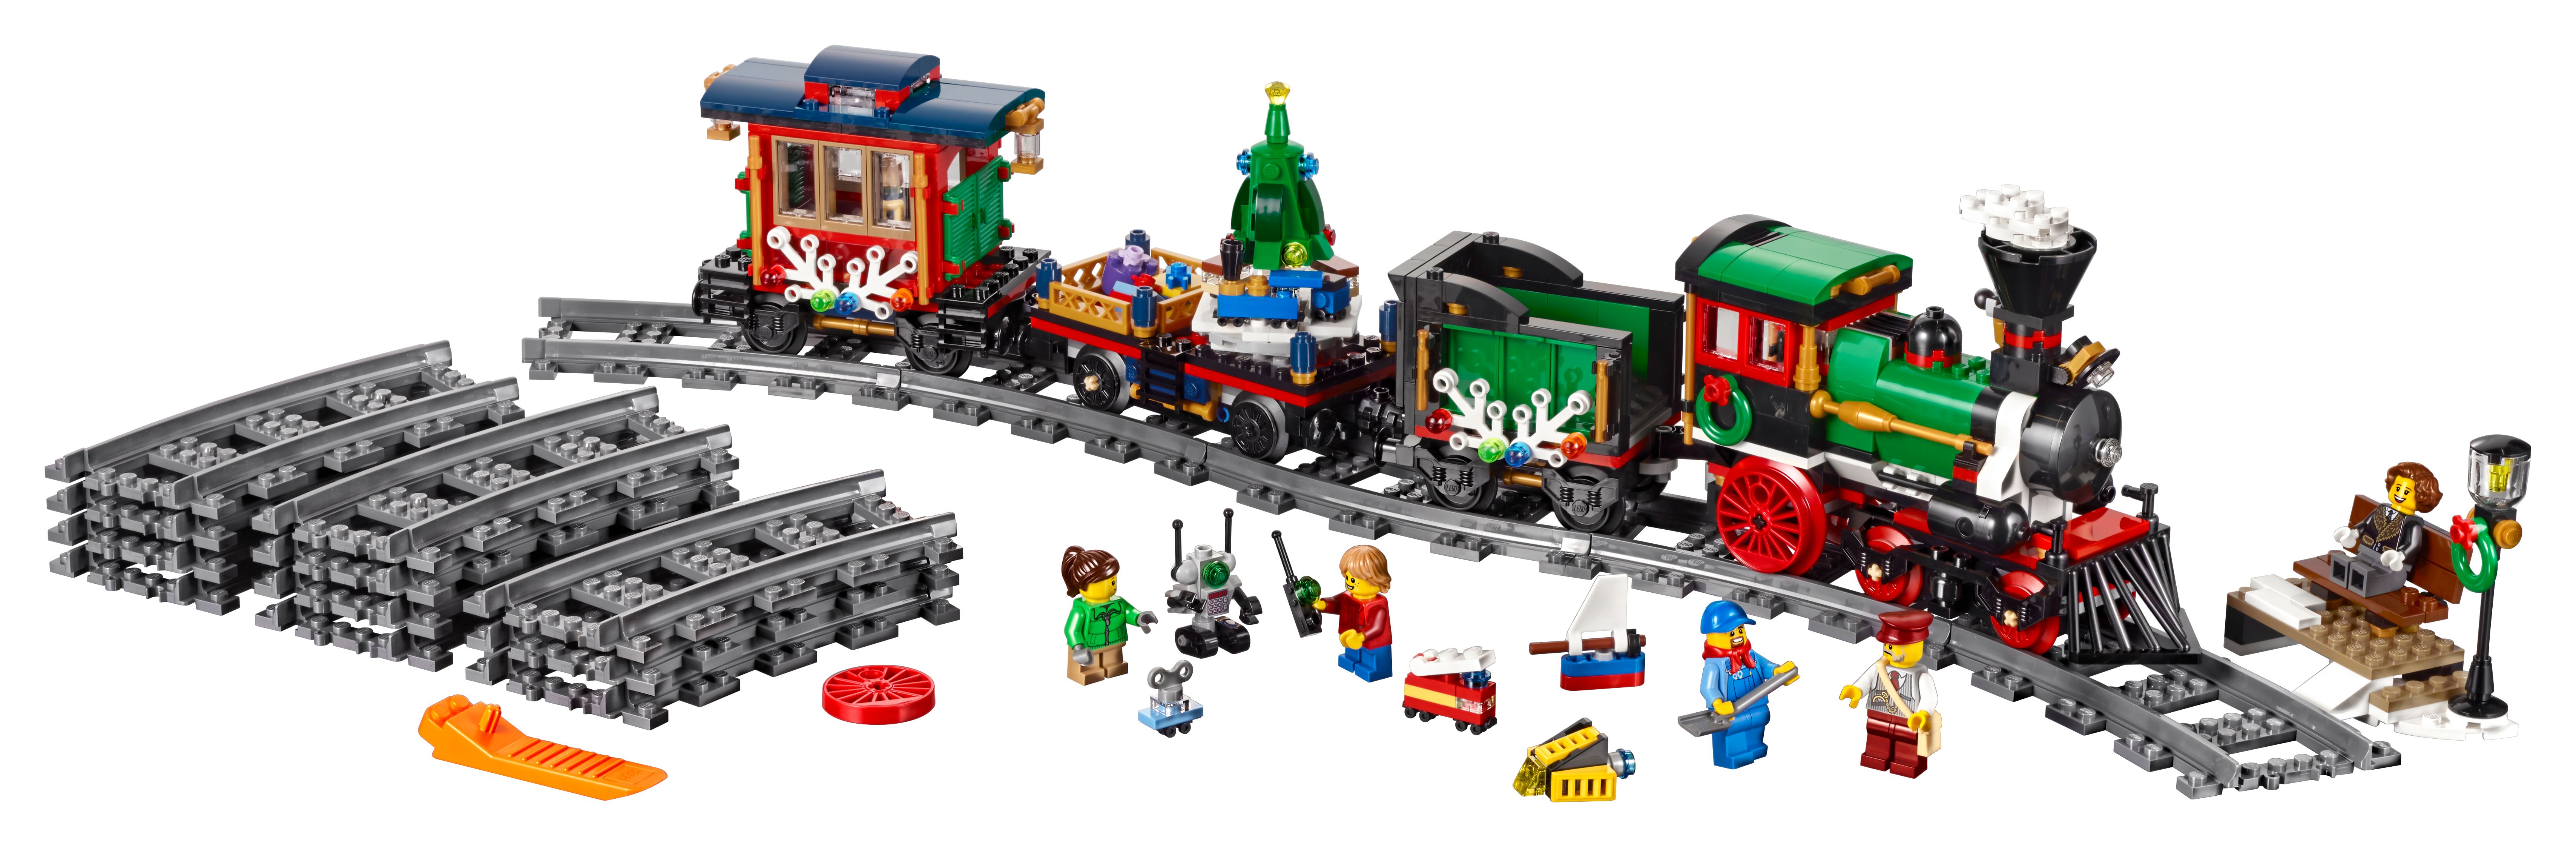 LEGO Creator Expert Winter Holiday Train 10254 - image 2 of 6